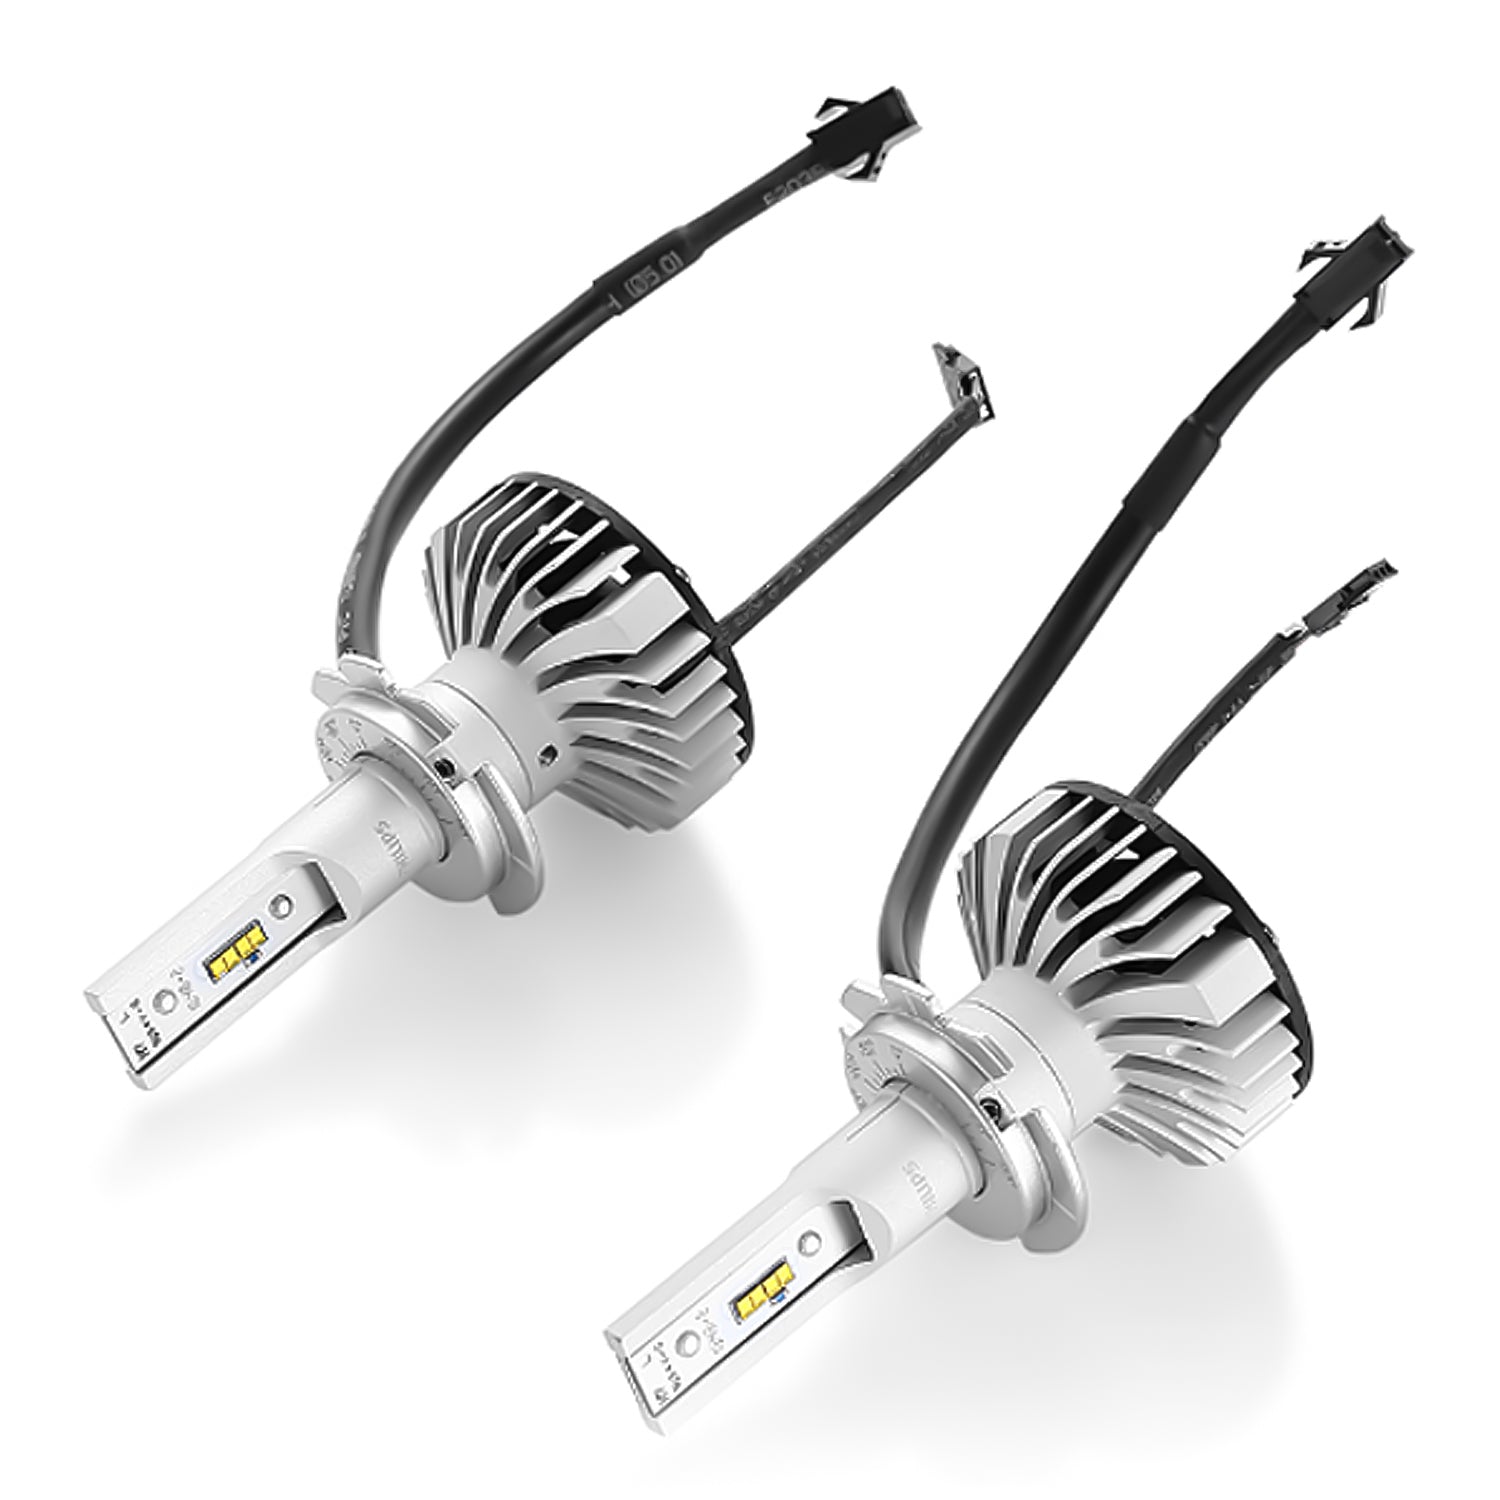 X-tremeUltinon LED Fahrzeugscheinwerferlampe 12985BWX2